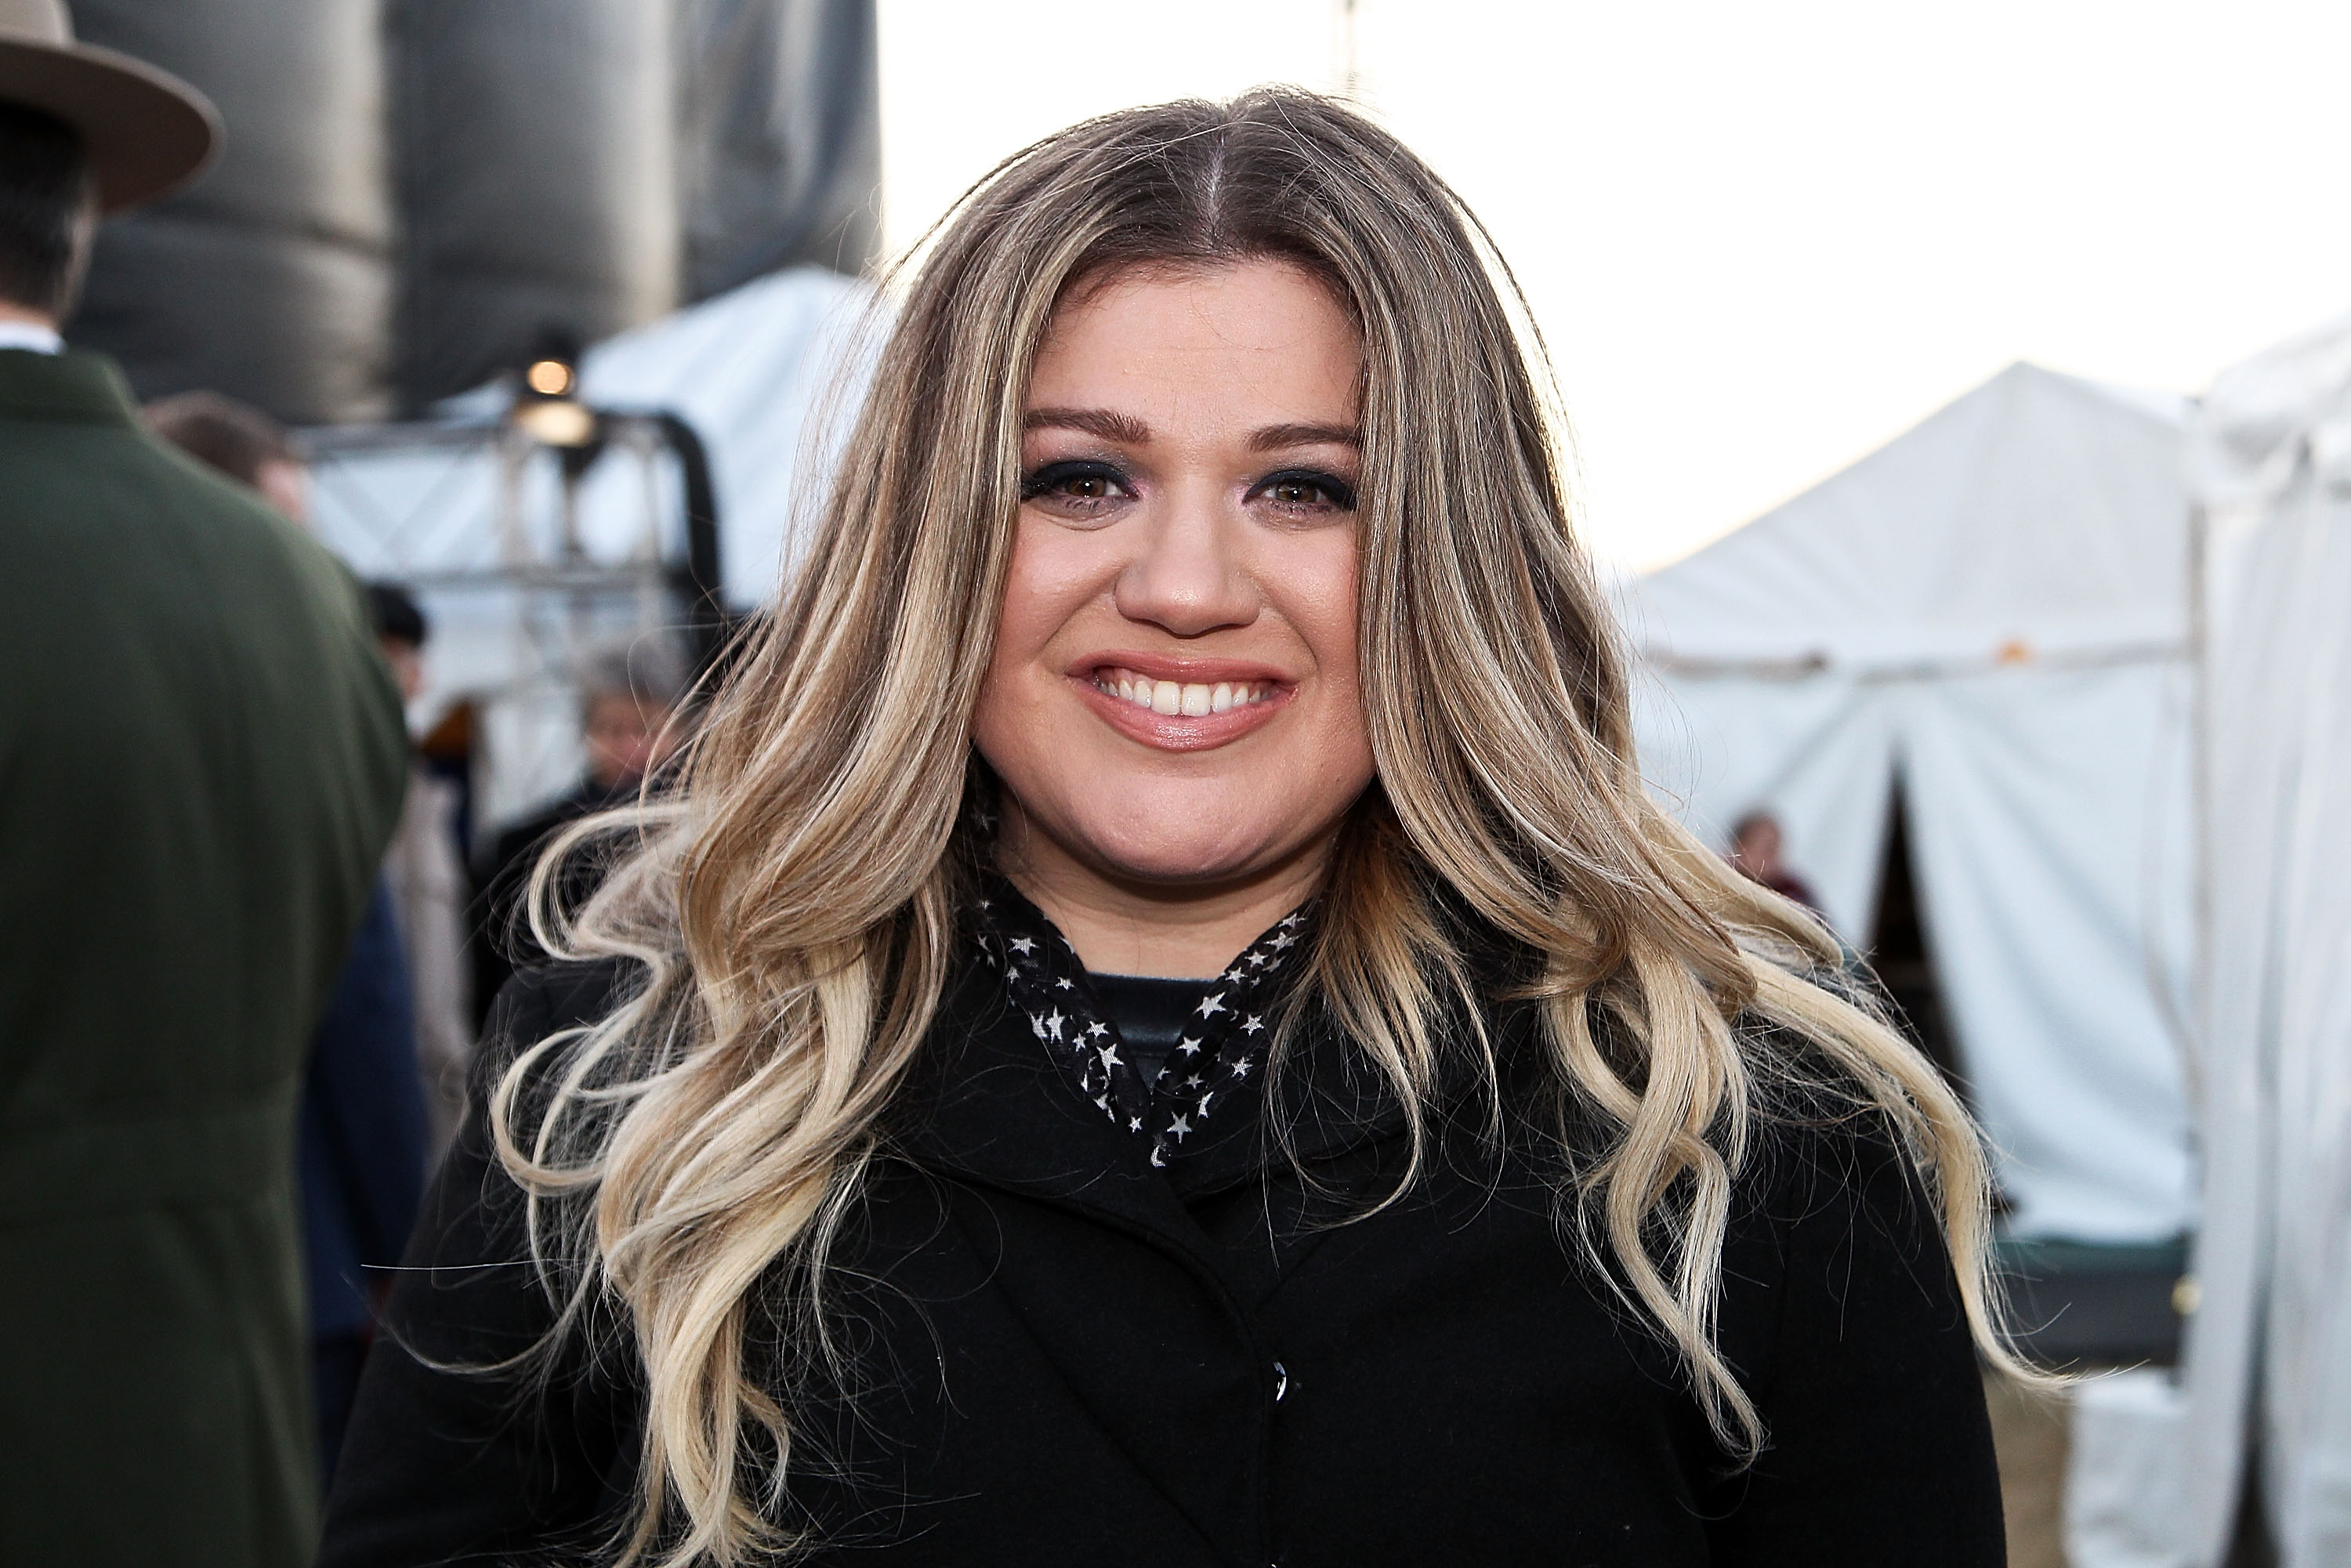 Kelly Clarkson's popular Hair Styles